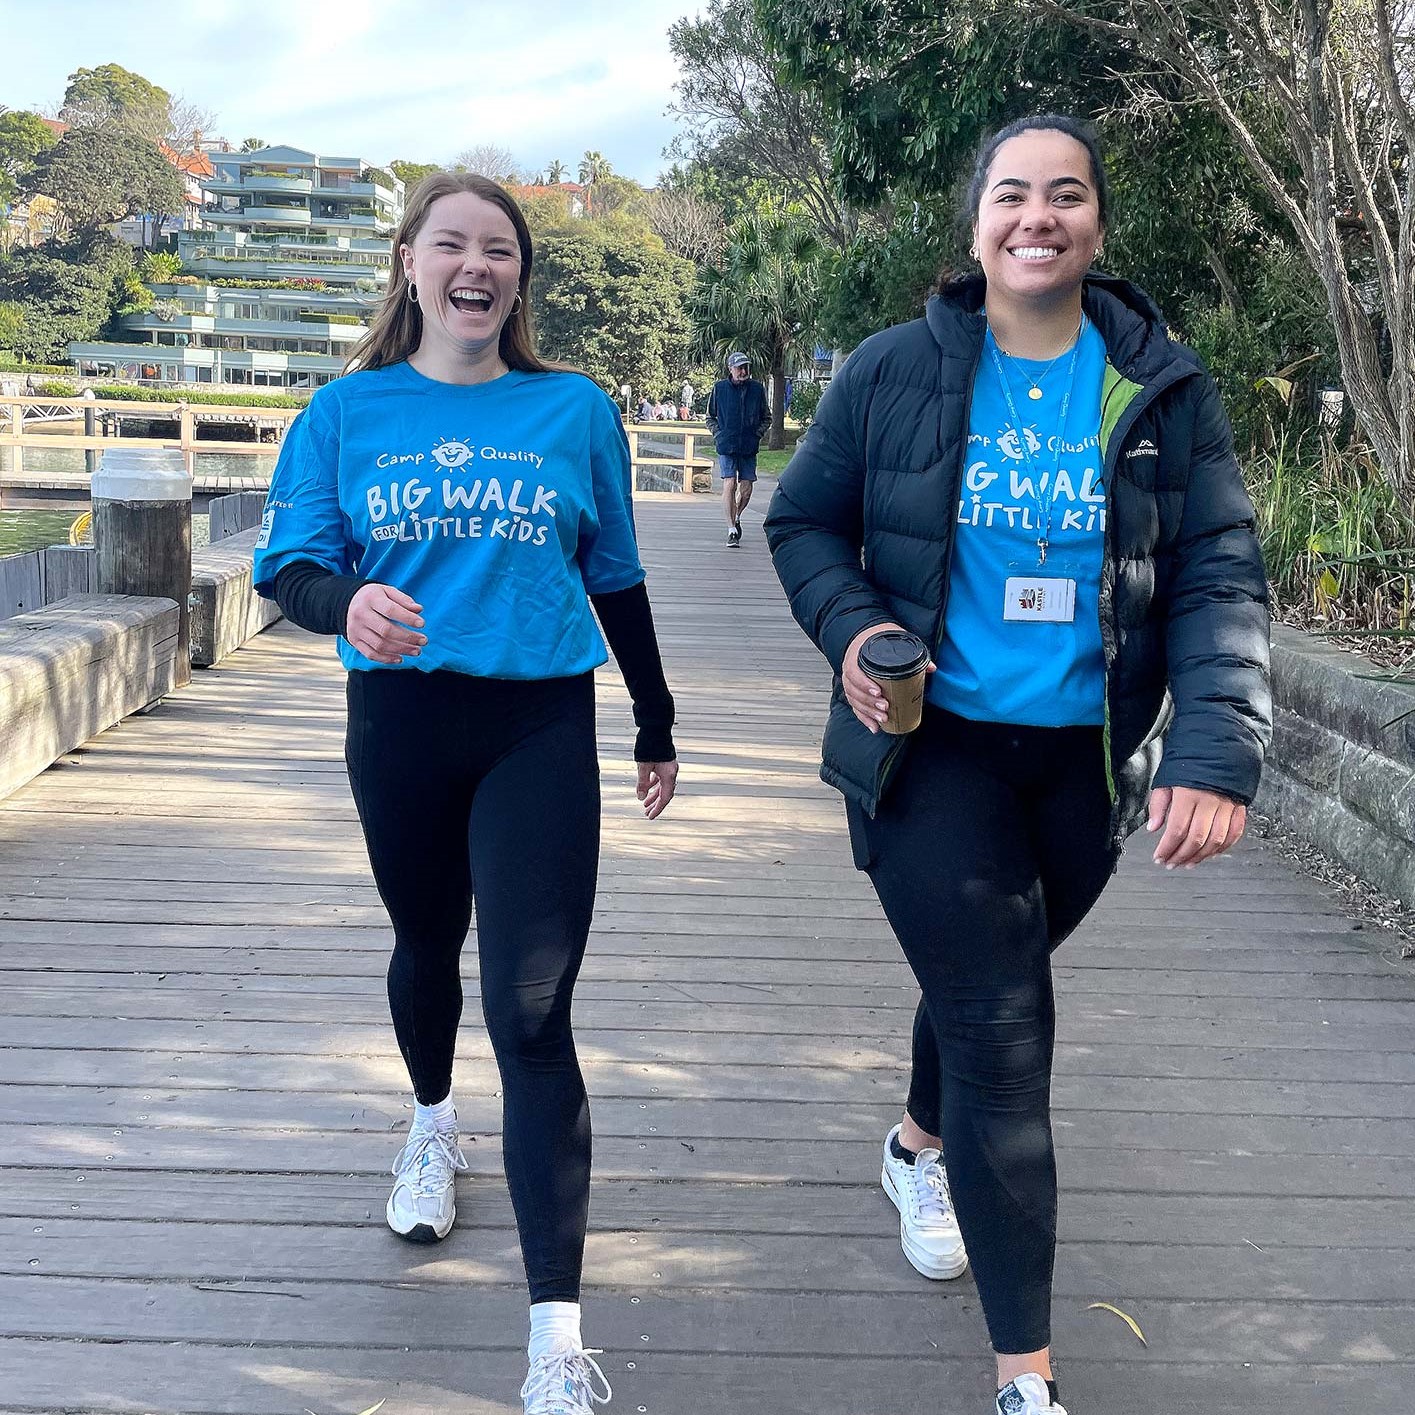 Two girls taking part in Big Walk for Little Kids